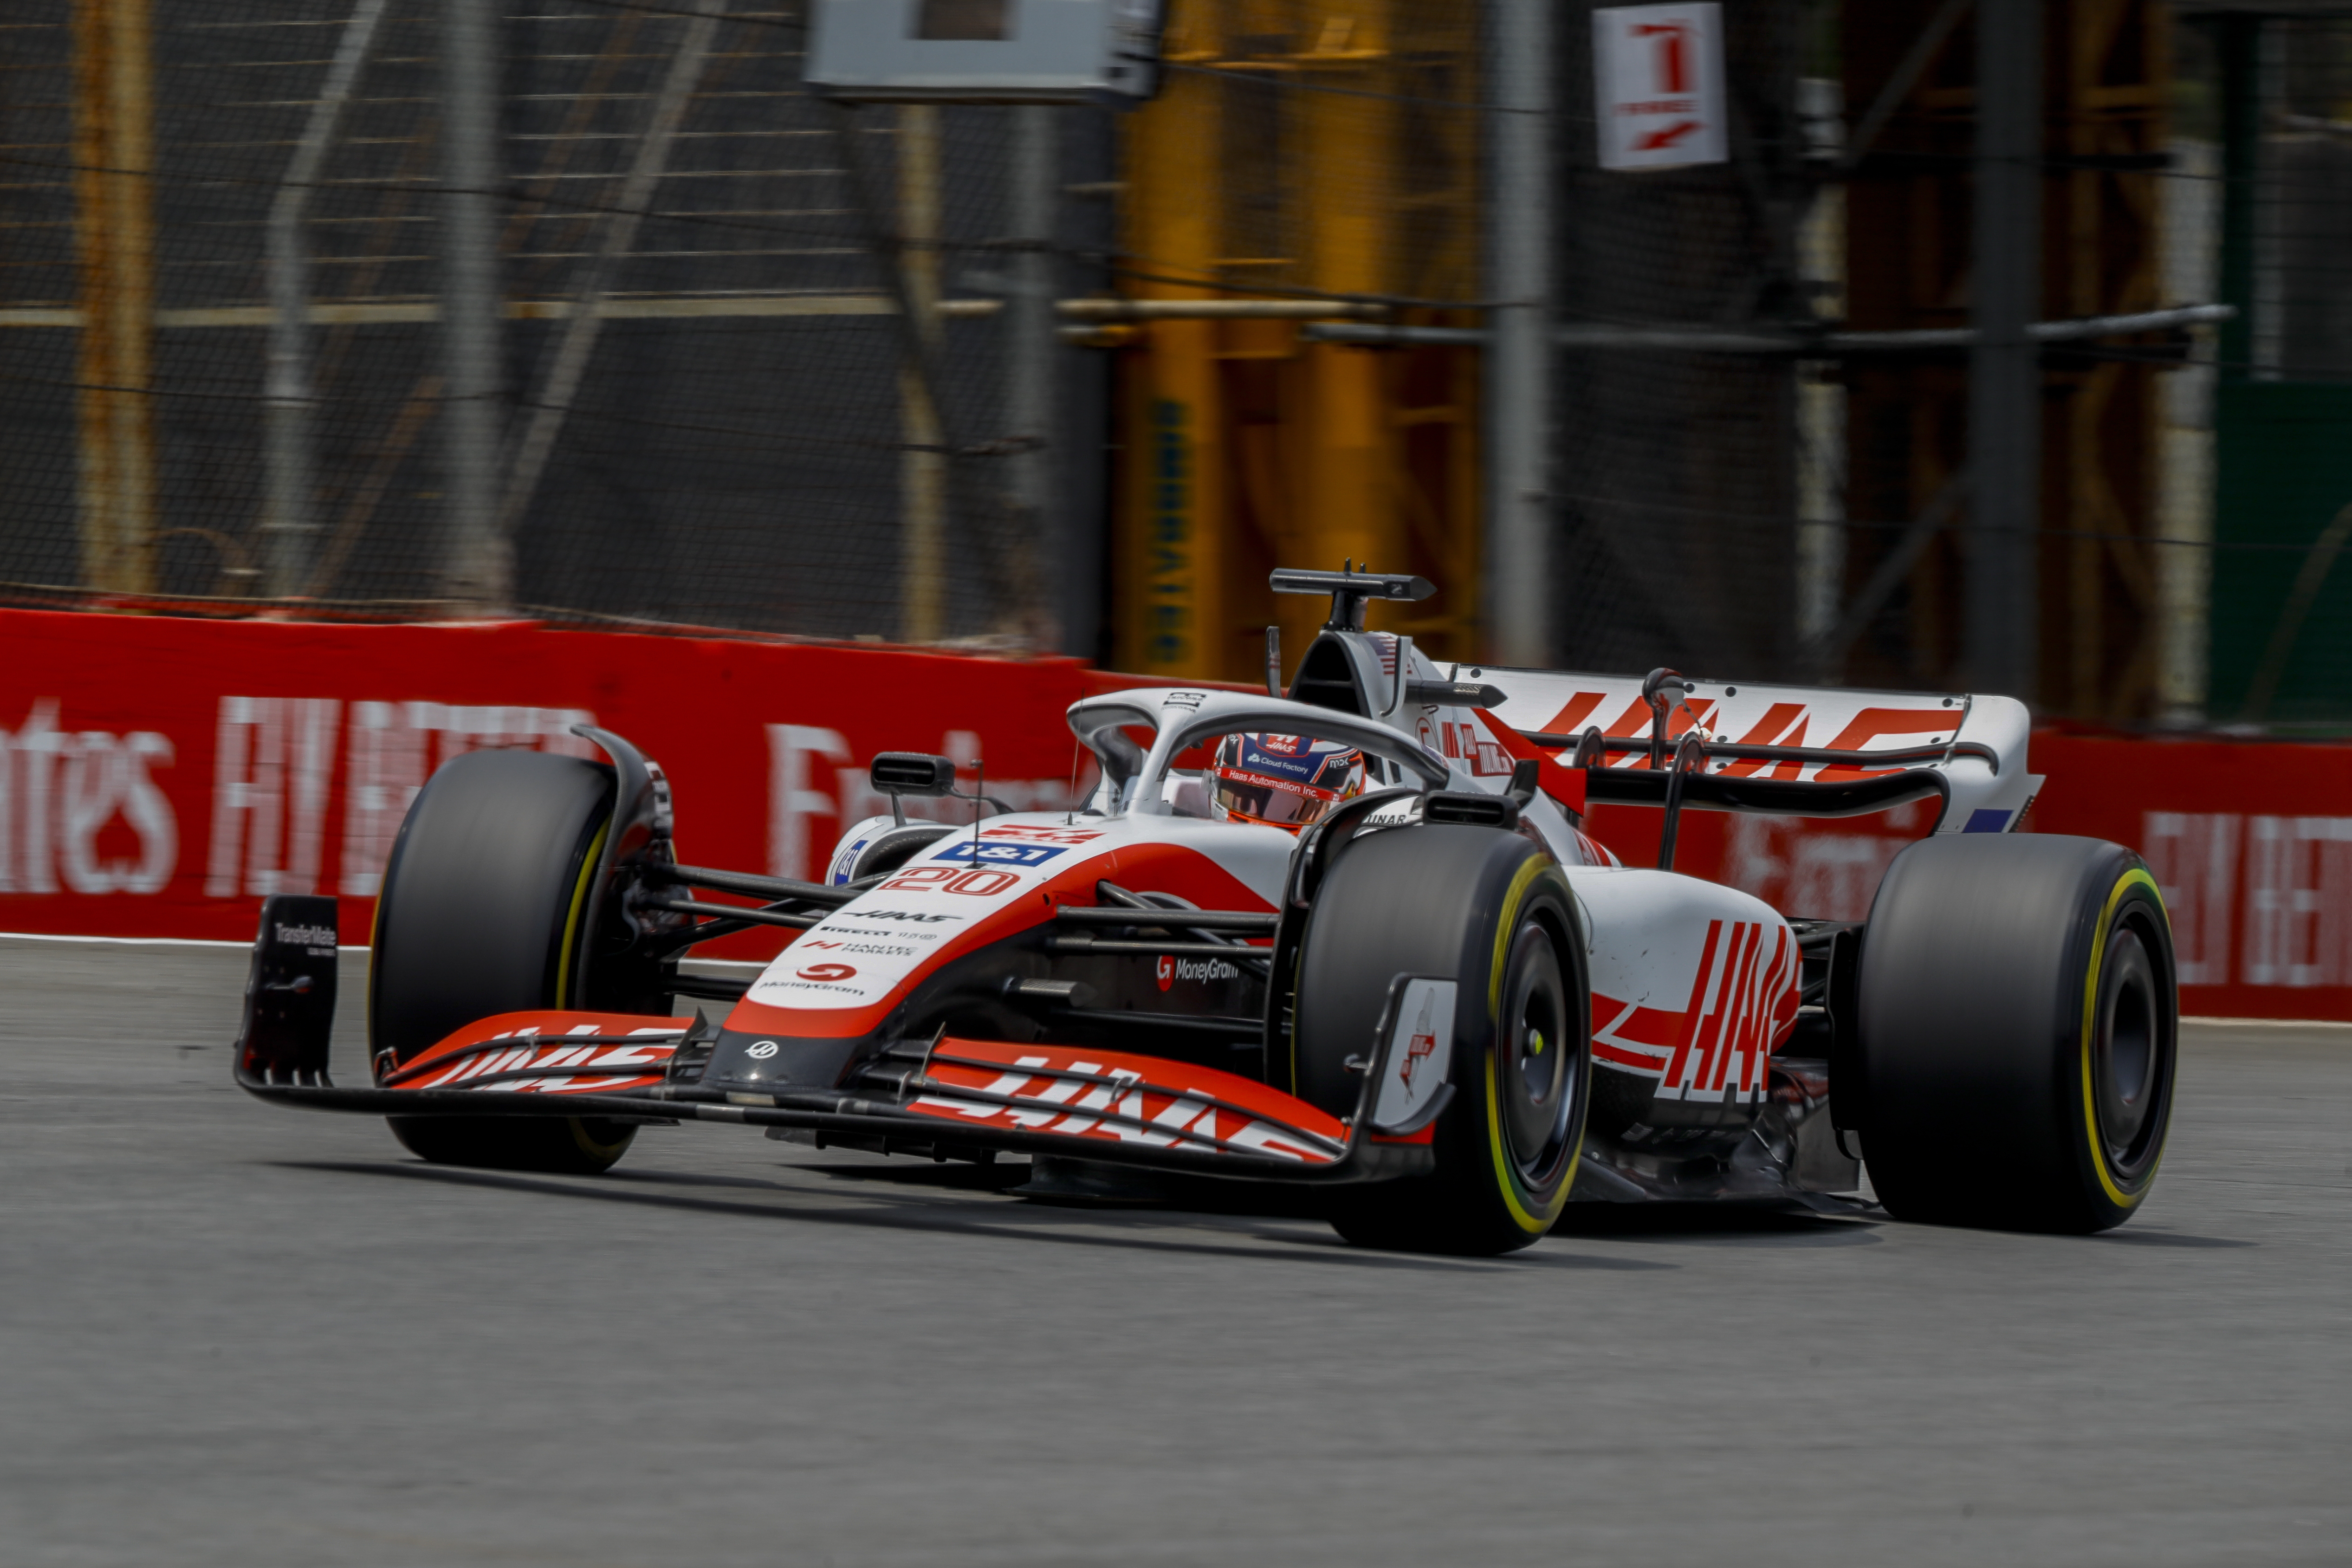 Sao Paulo Grand Prix: Preview - Haas 